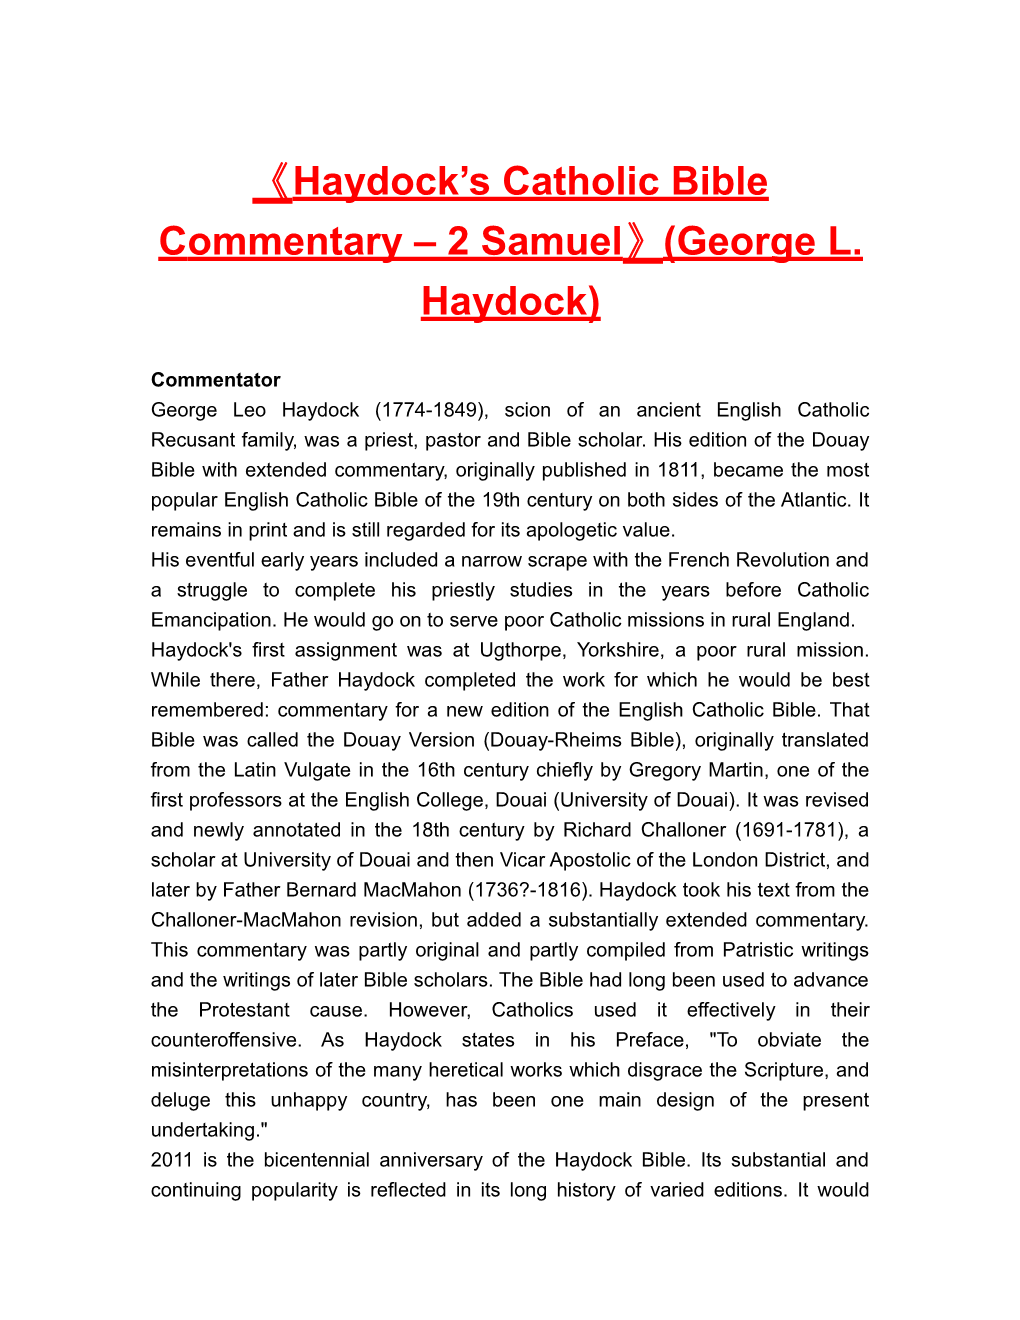 Haydock Scatholic Bible Commentary 2 Samuel (George L. Haydock)